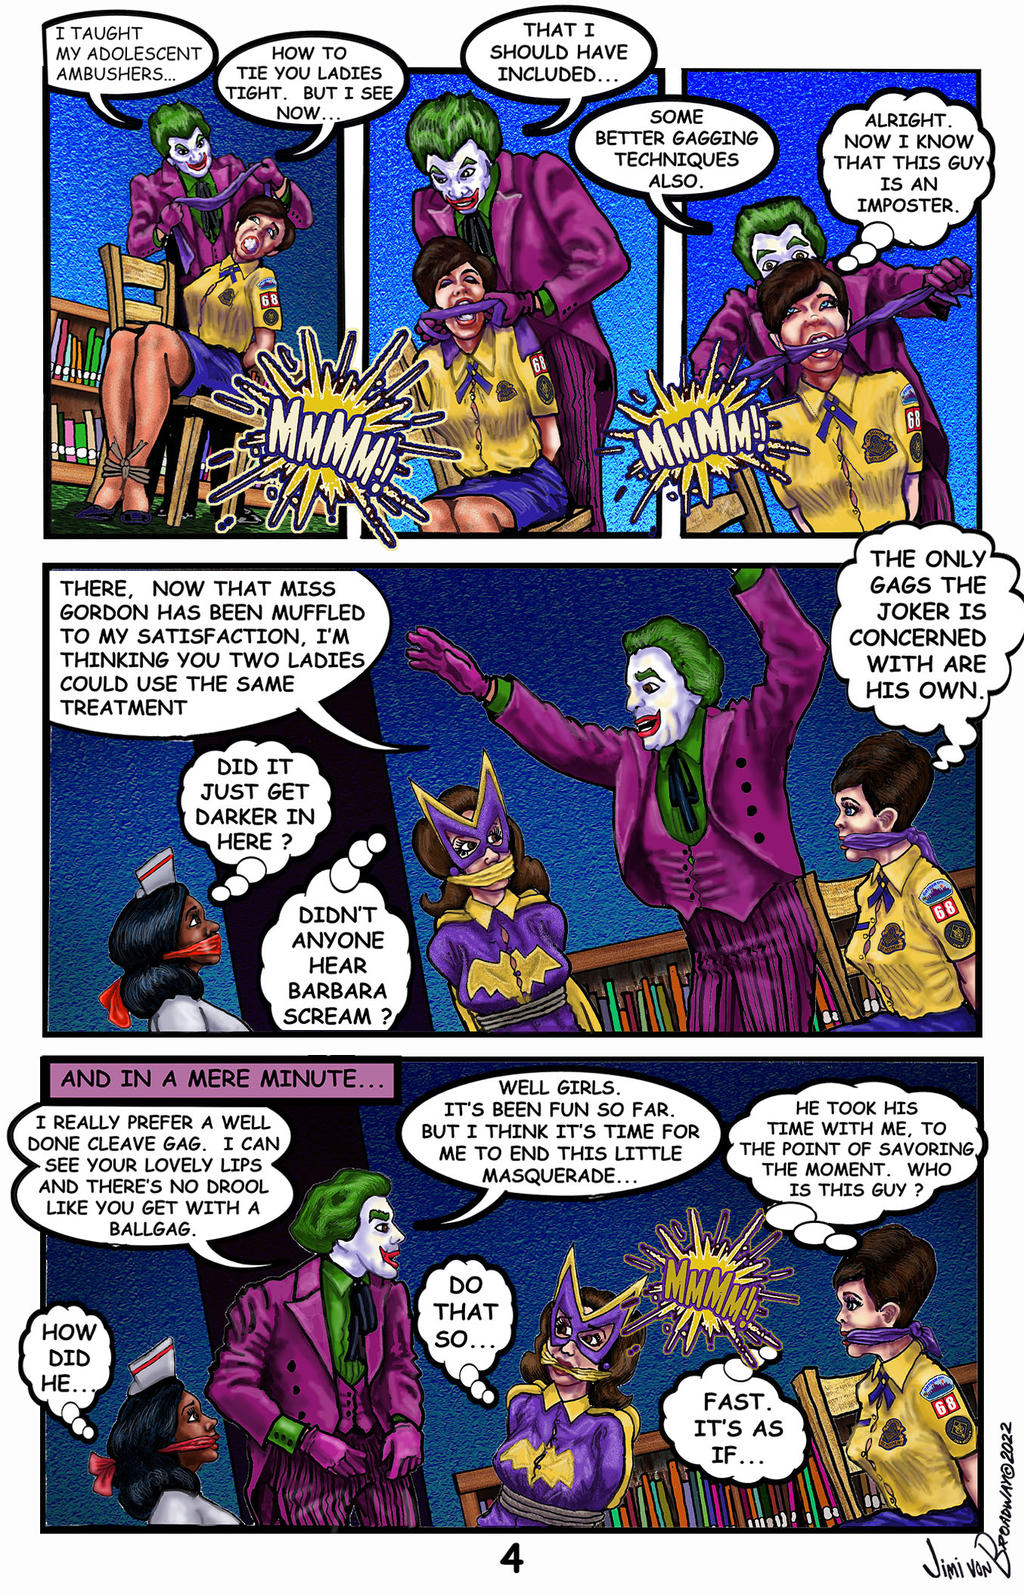 10 Costume Party Caper Page 004 by Jimi-von-Broadway on DeviantArt